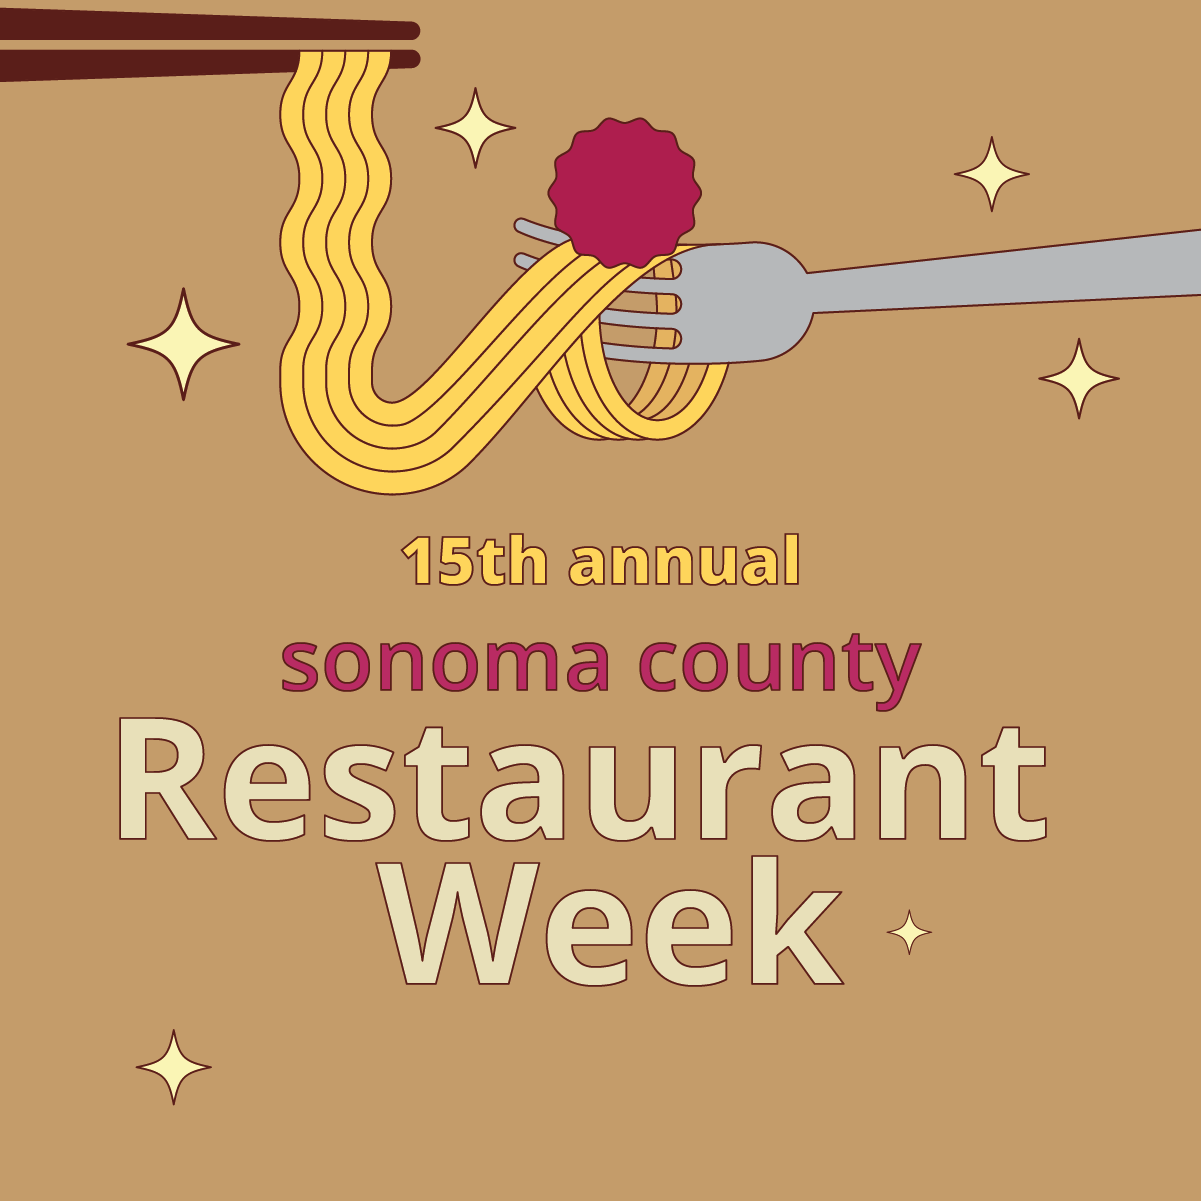 15th annual Sonoma county Restaurant Week